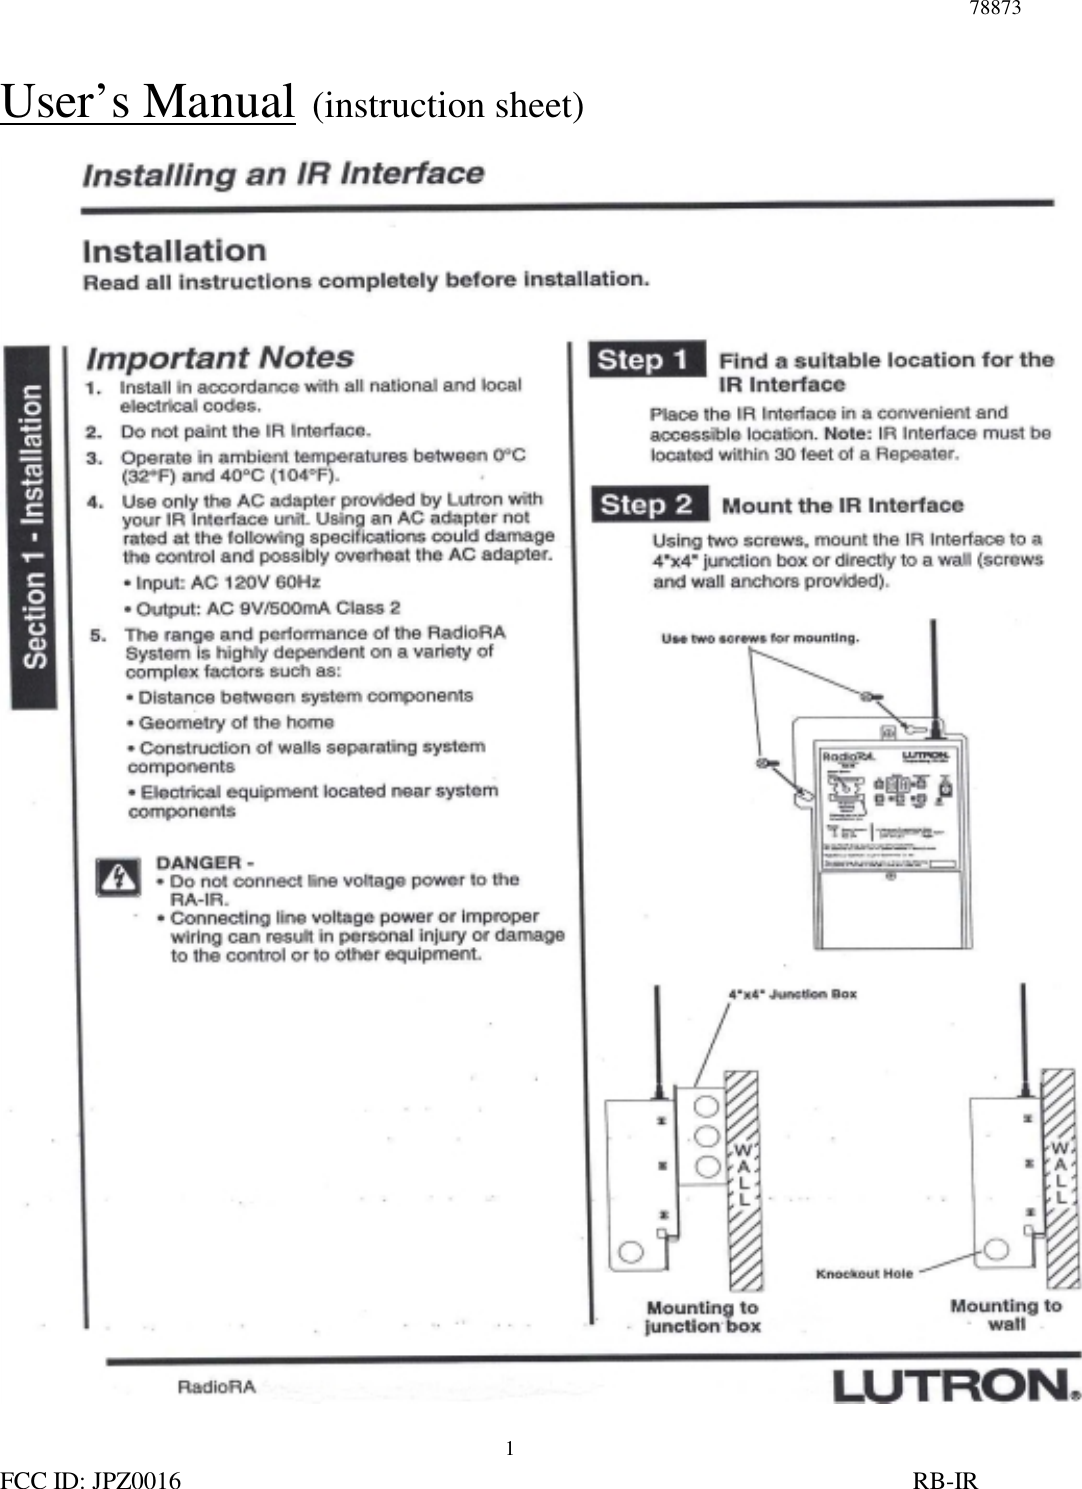 78873FCC ID: JPZ0016                                                                                                                     RB-IR1User’s Manual  (instruction sheet)